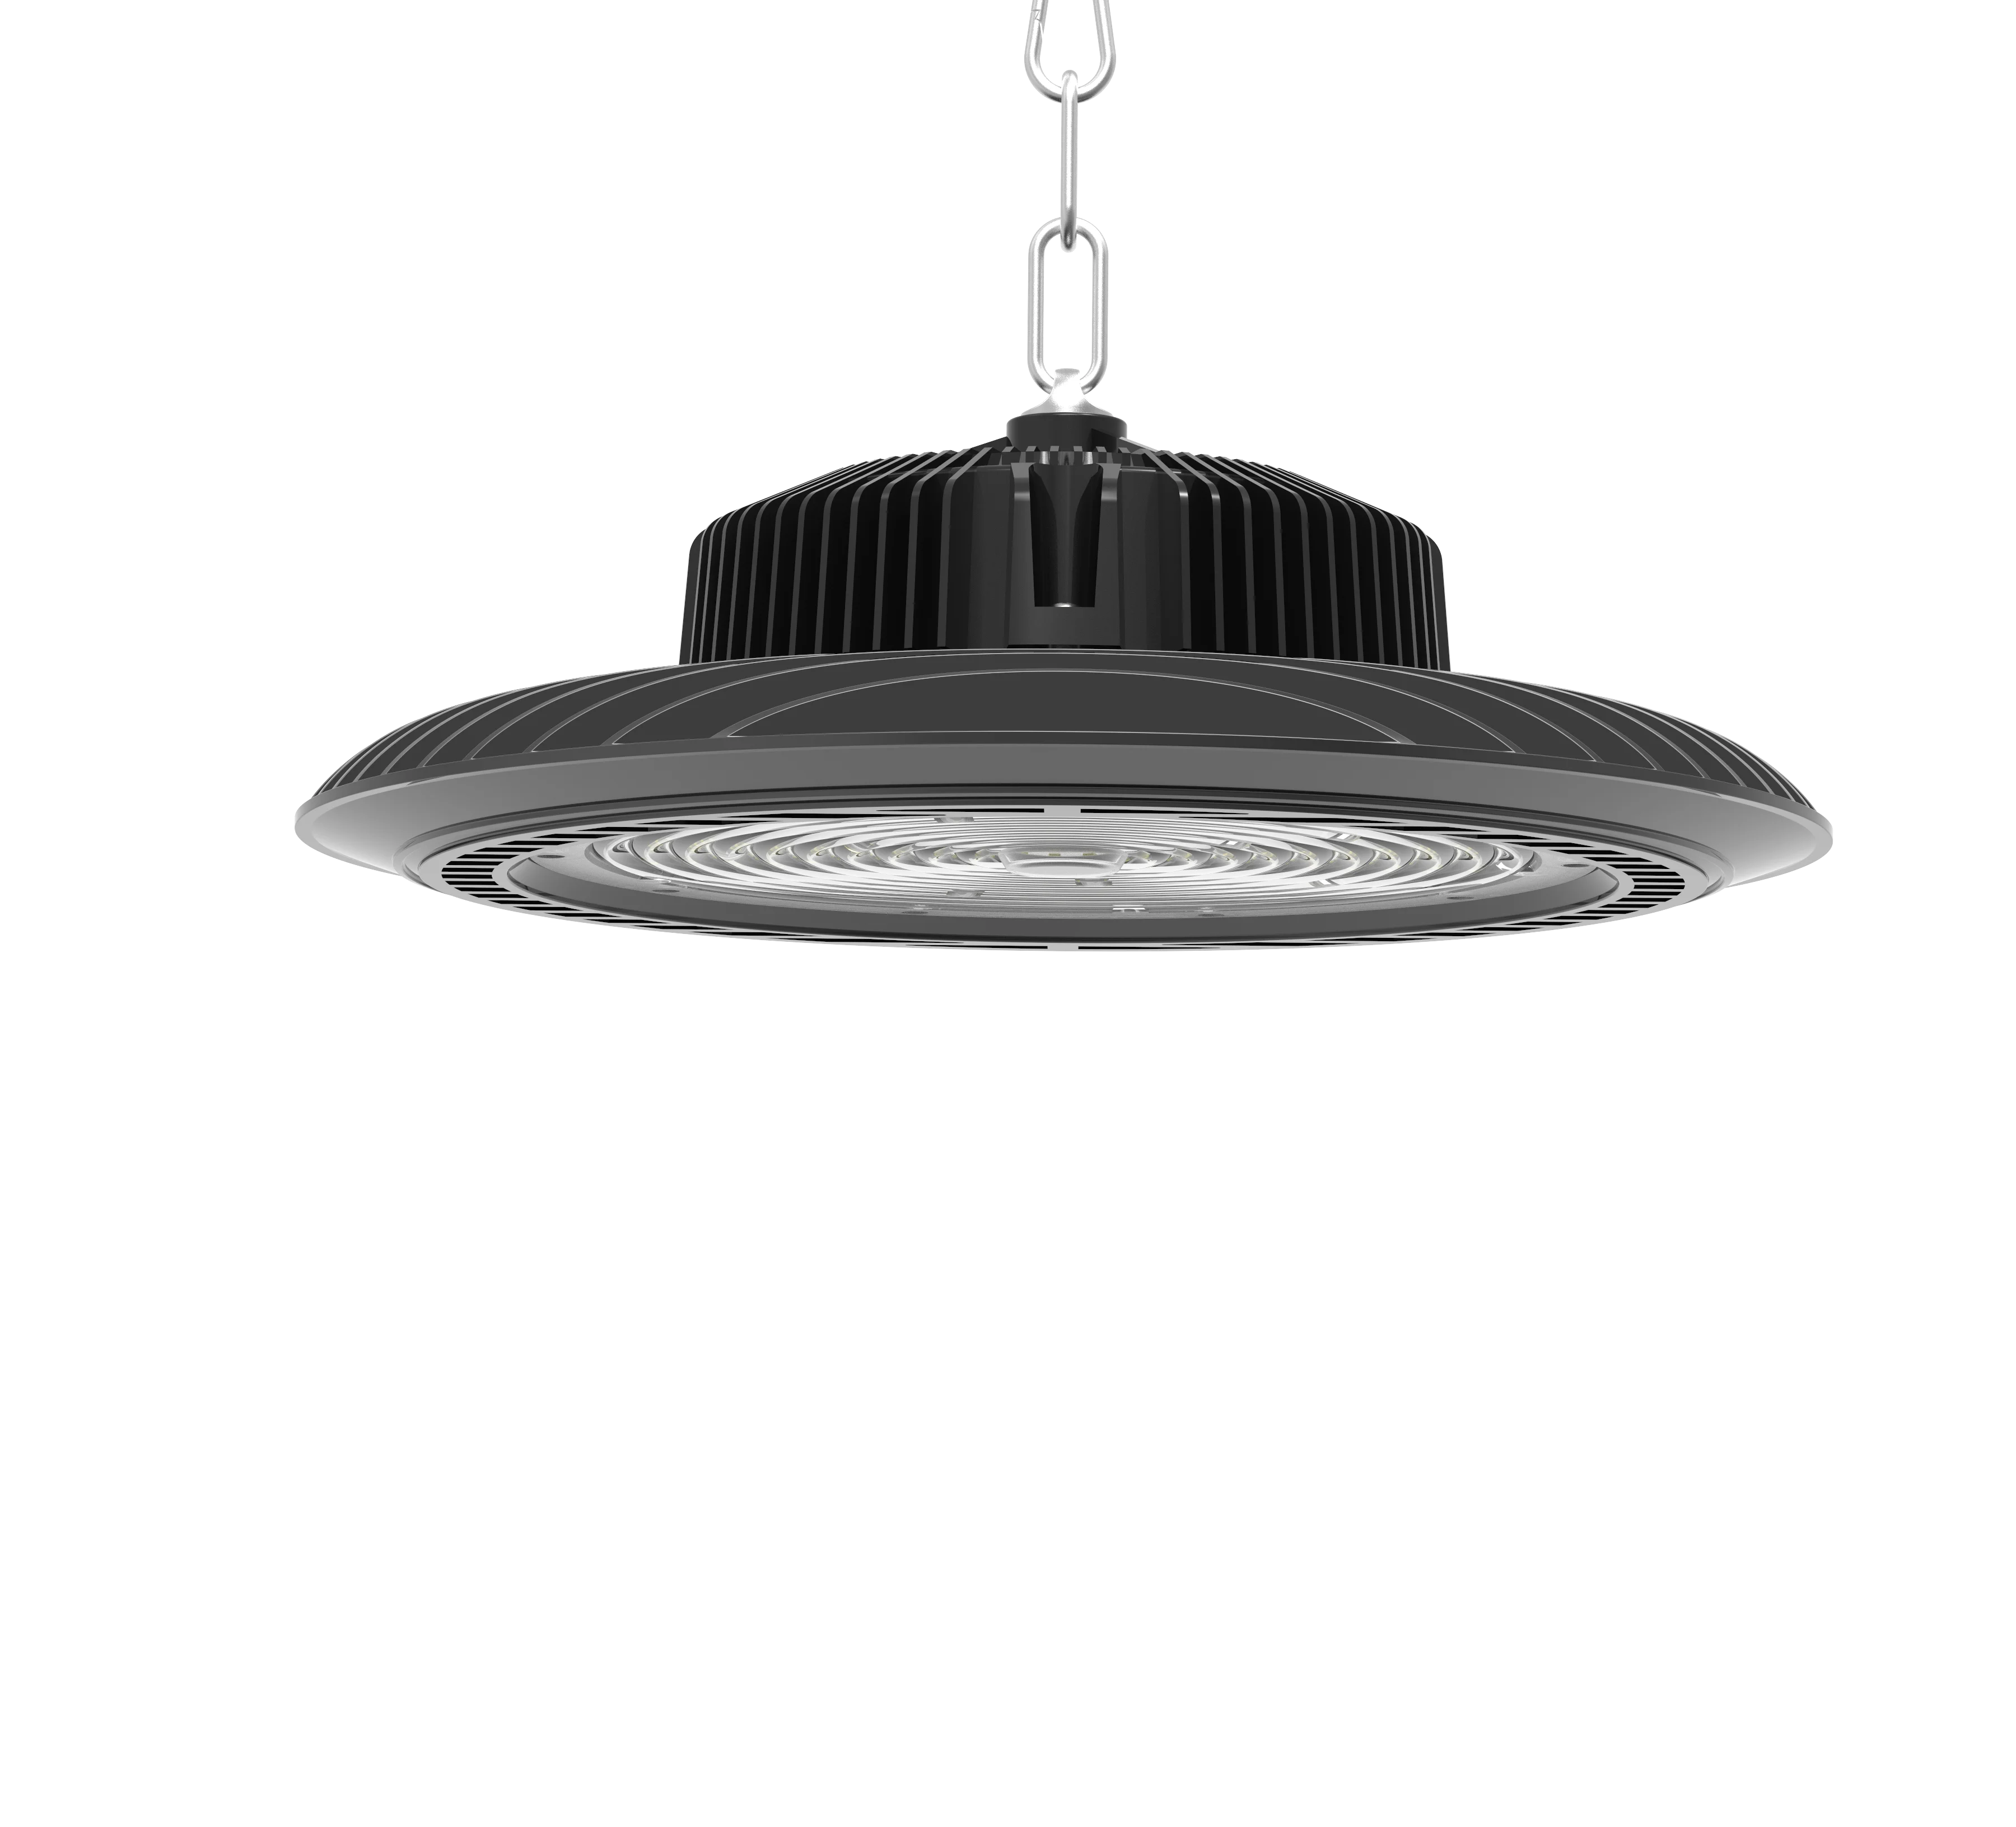 Best selling UFO high bay light 100W 150W 200W 250W waterproof IP65 UFO LED high bay light for industrial warehouse use